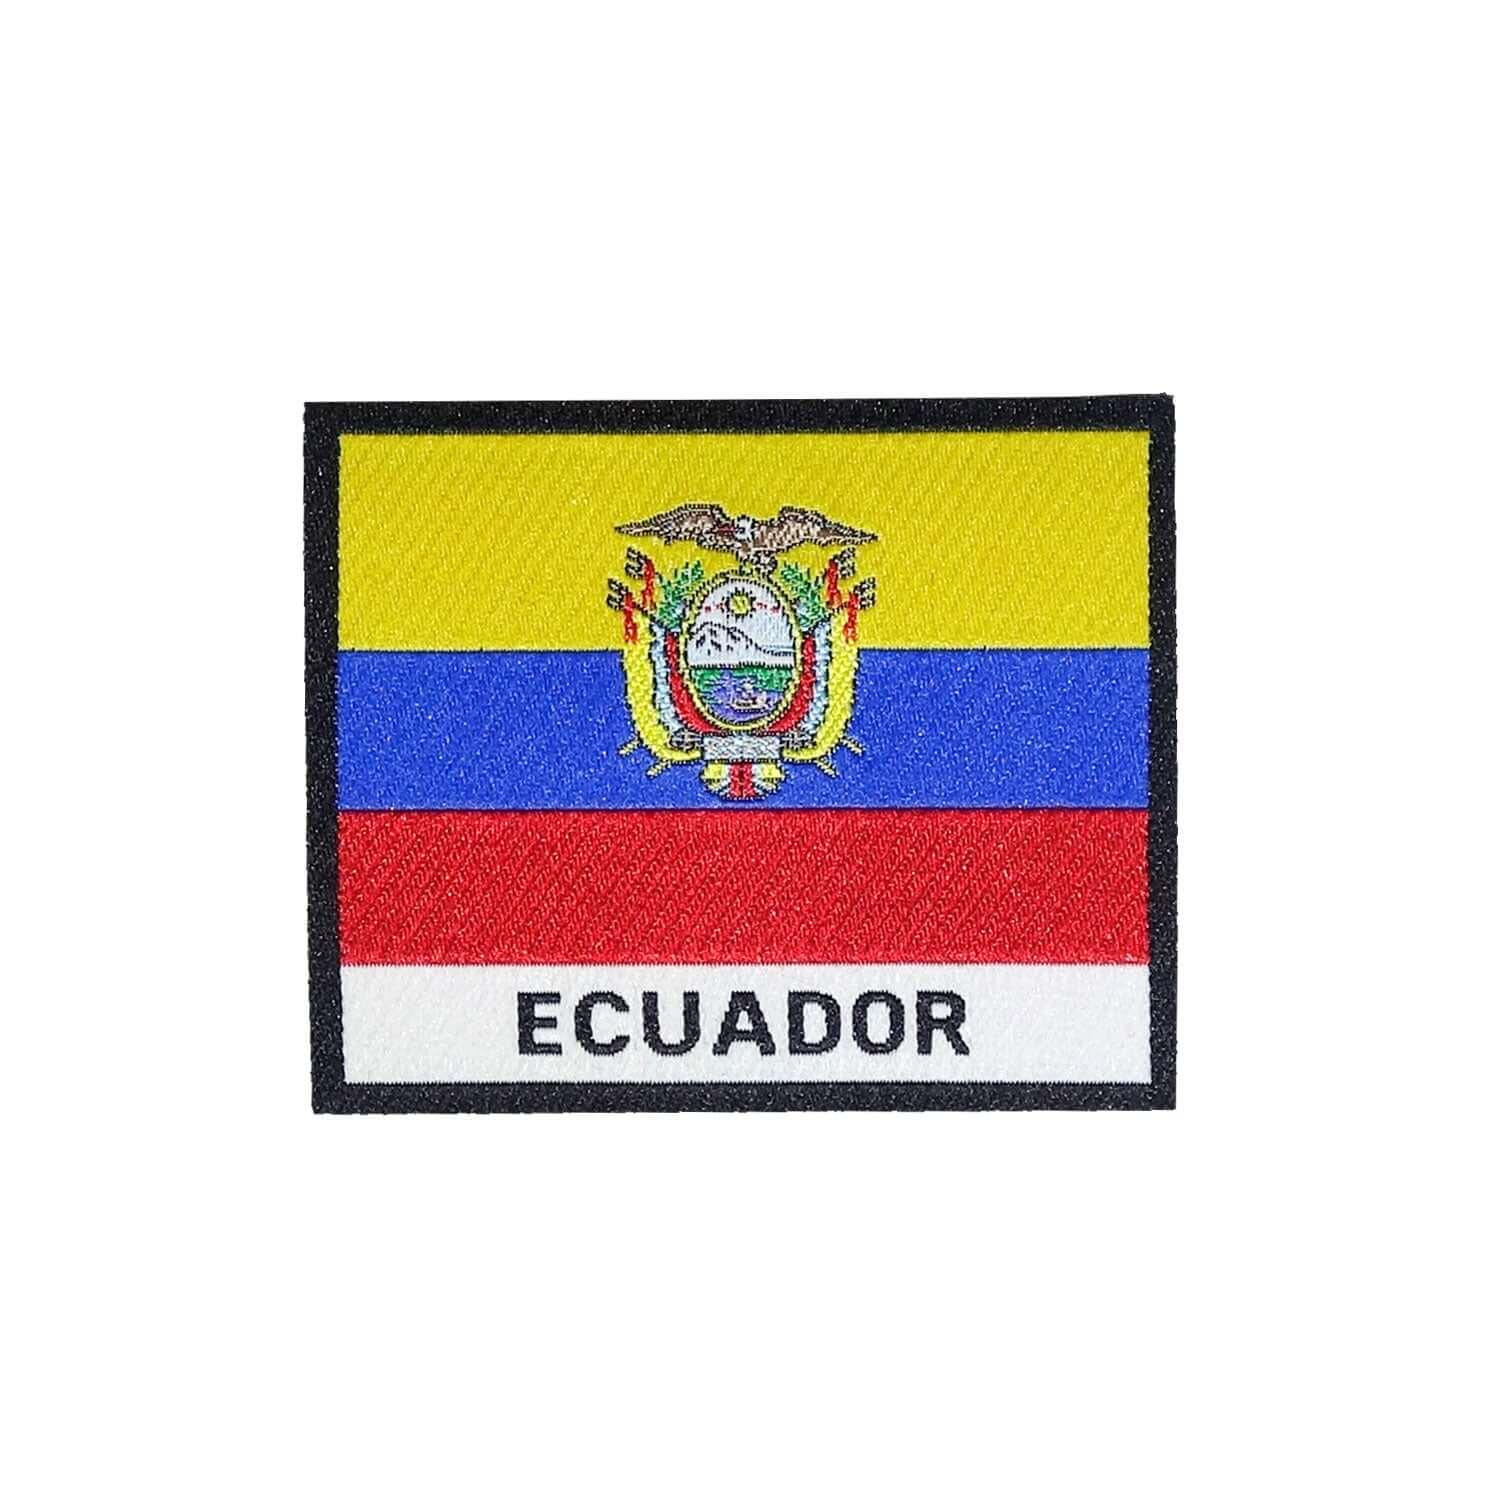 Ecuador Flag Iron On Patch - Rocket Factory Apparel